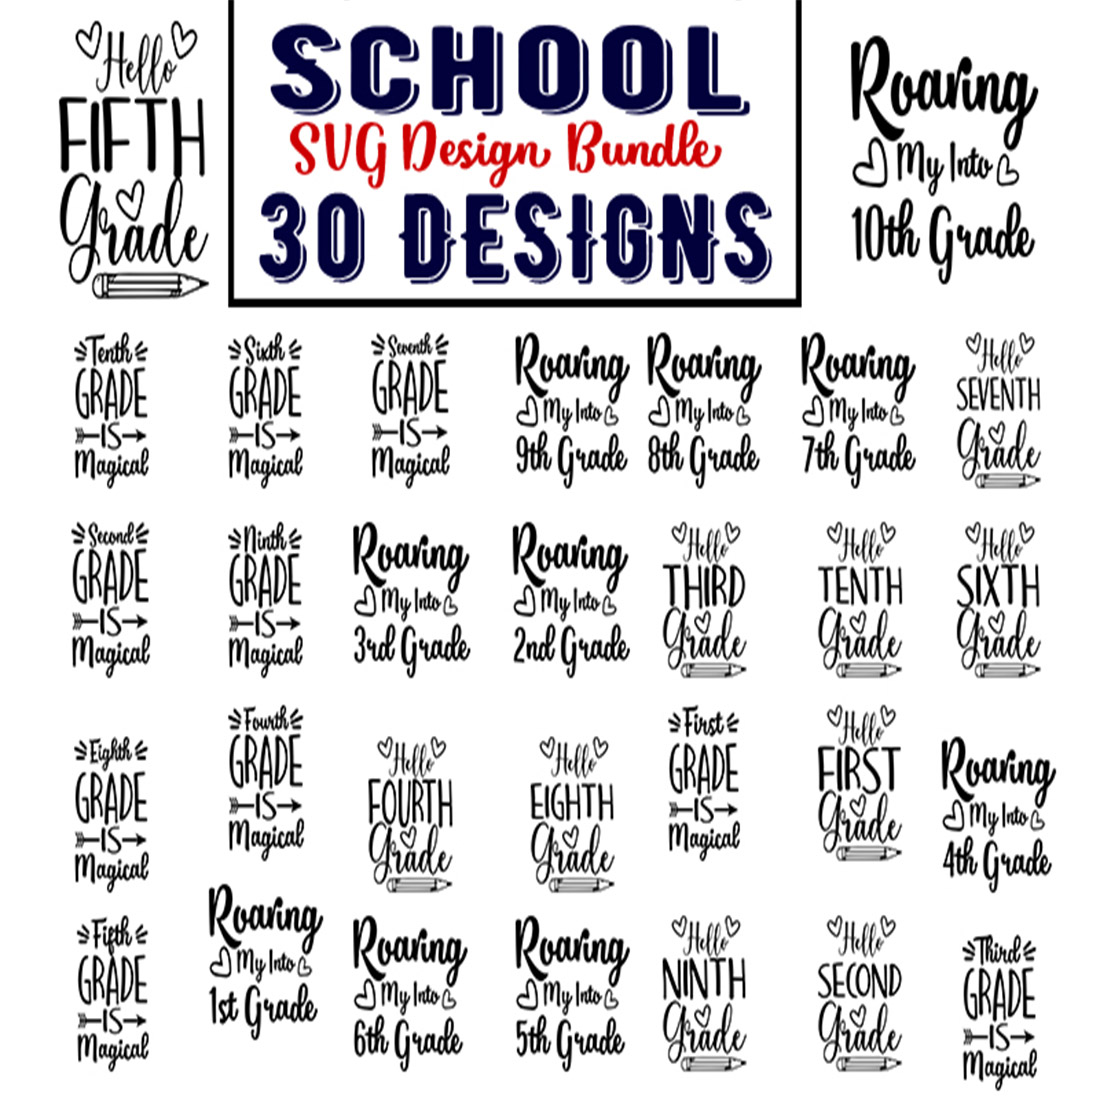 The back of a school svt design bundle with 30 designs.